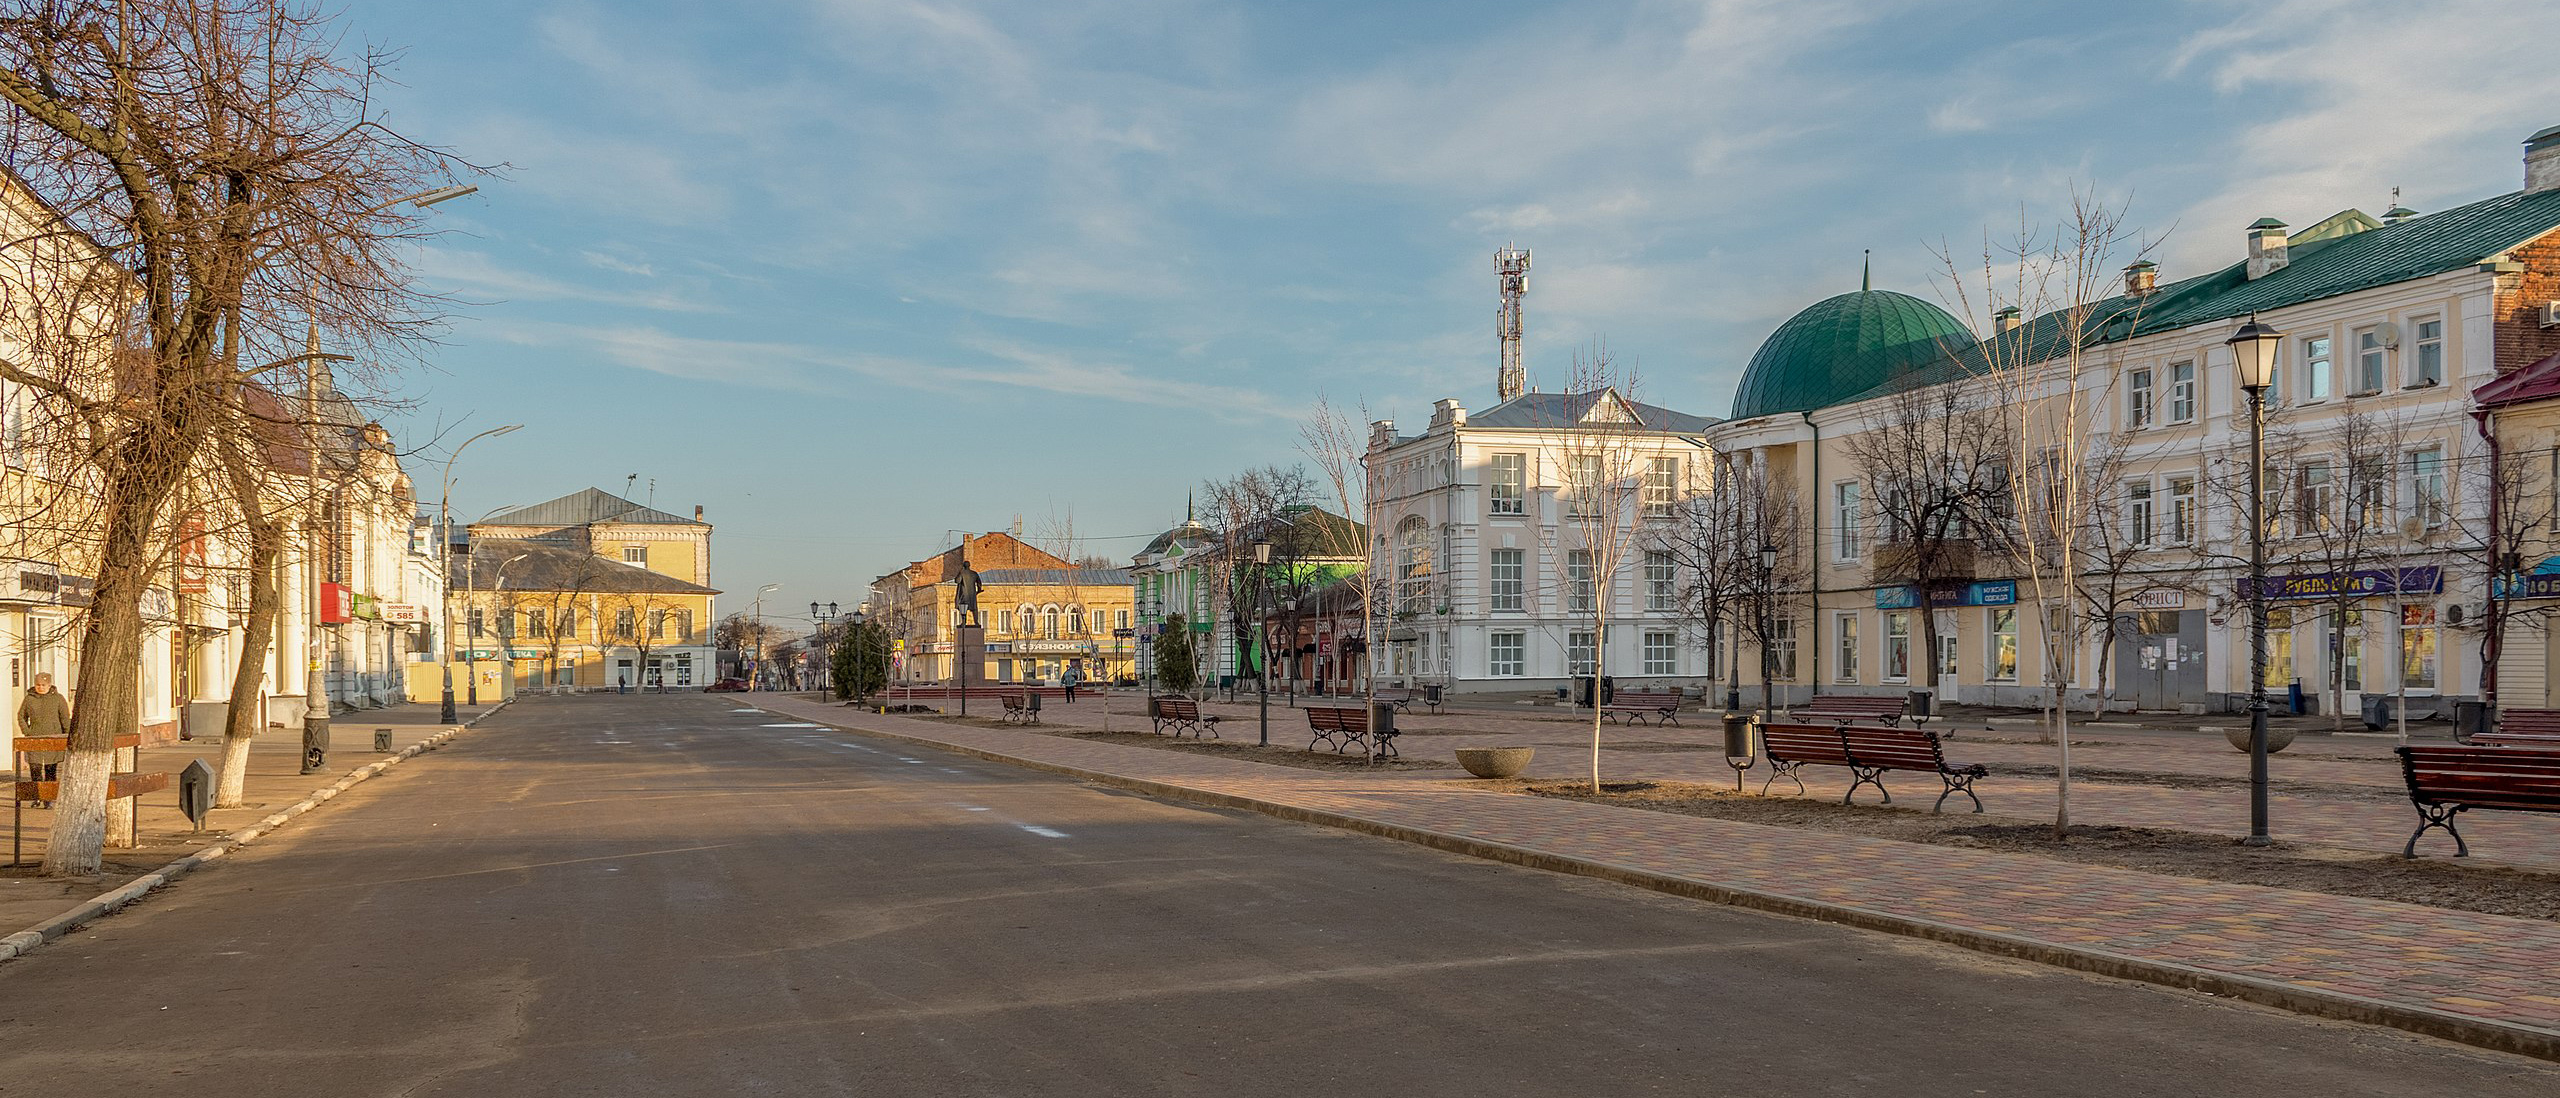 Sowjetskaja Straße Mitschurinsk